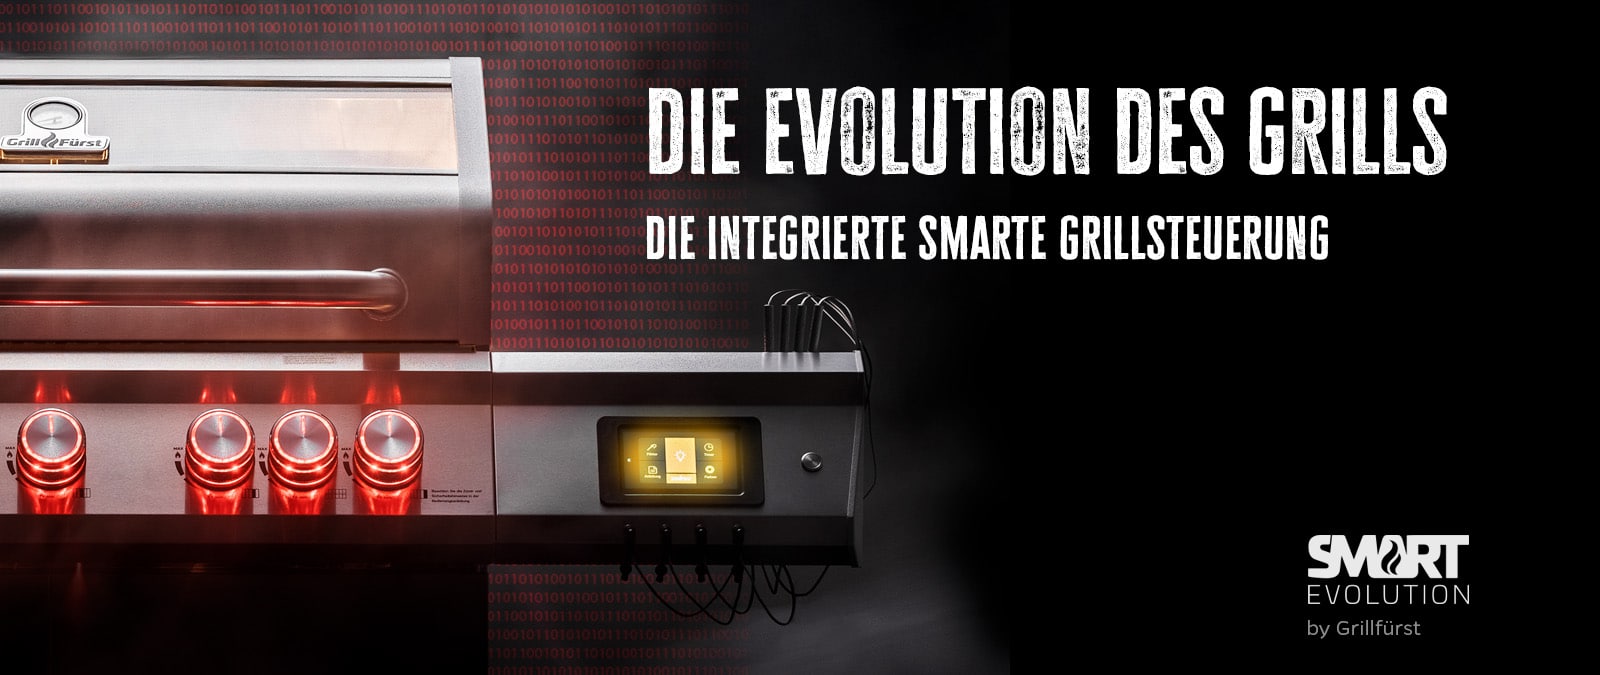 Die Evolution des Grills G521E SMART